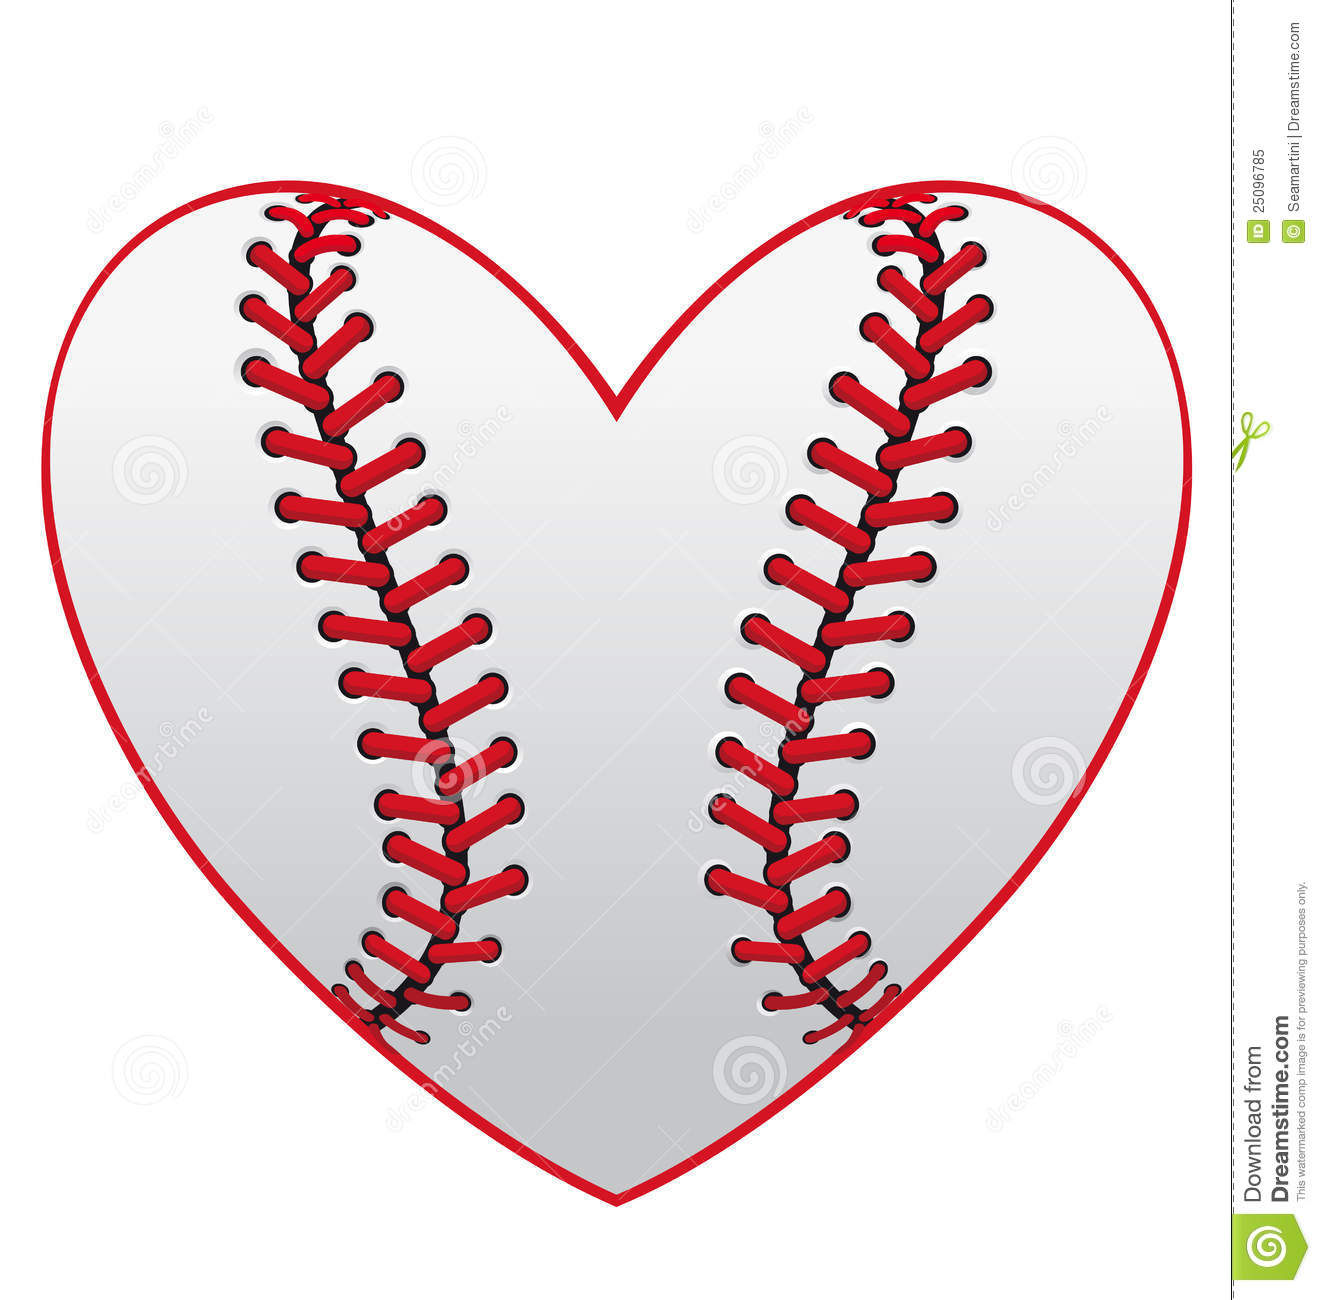 Baseball Heart Royalty Free Stock Photo   Image  25096785